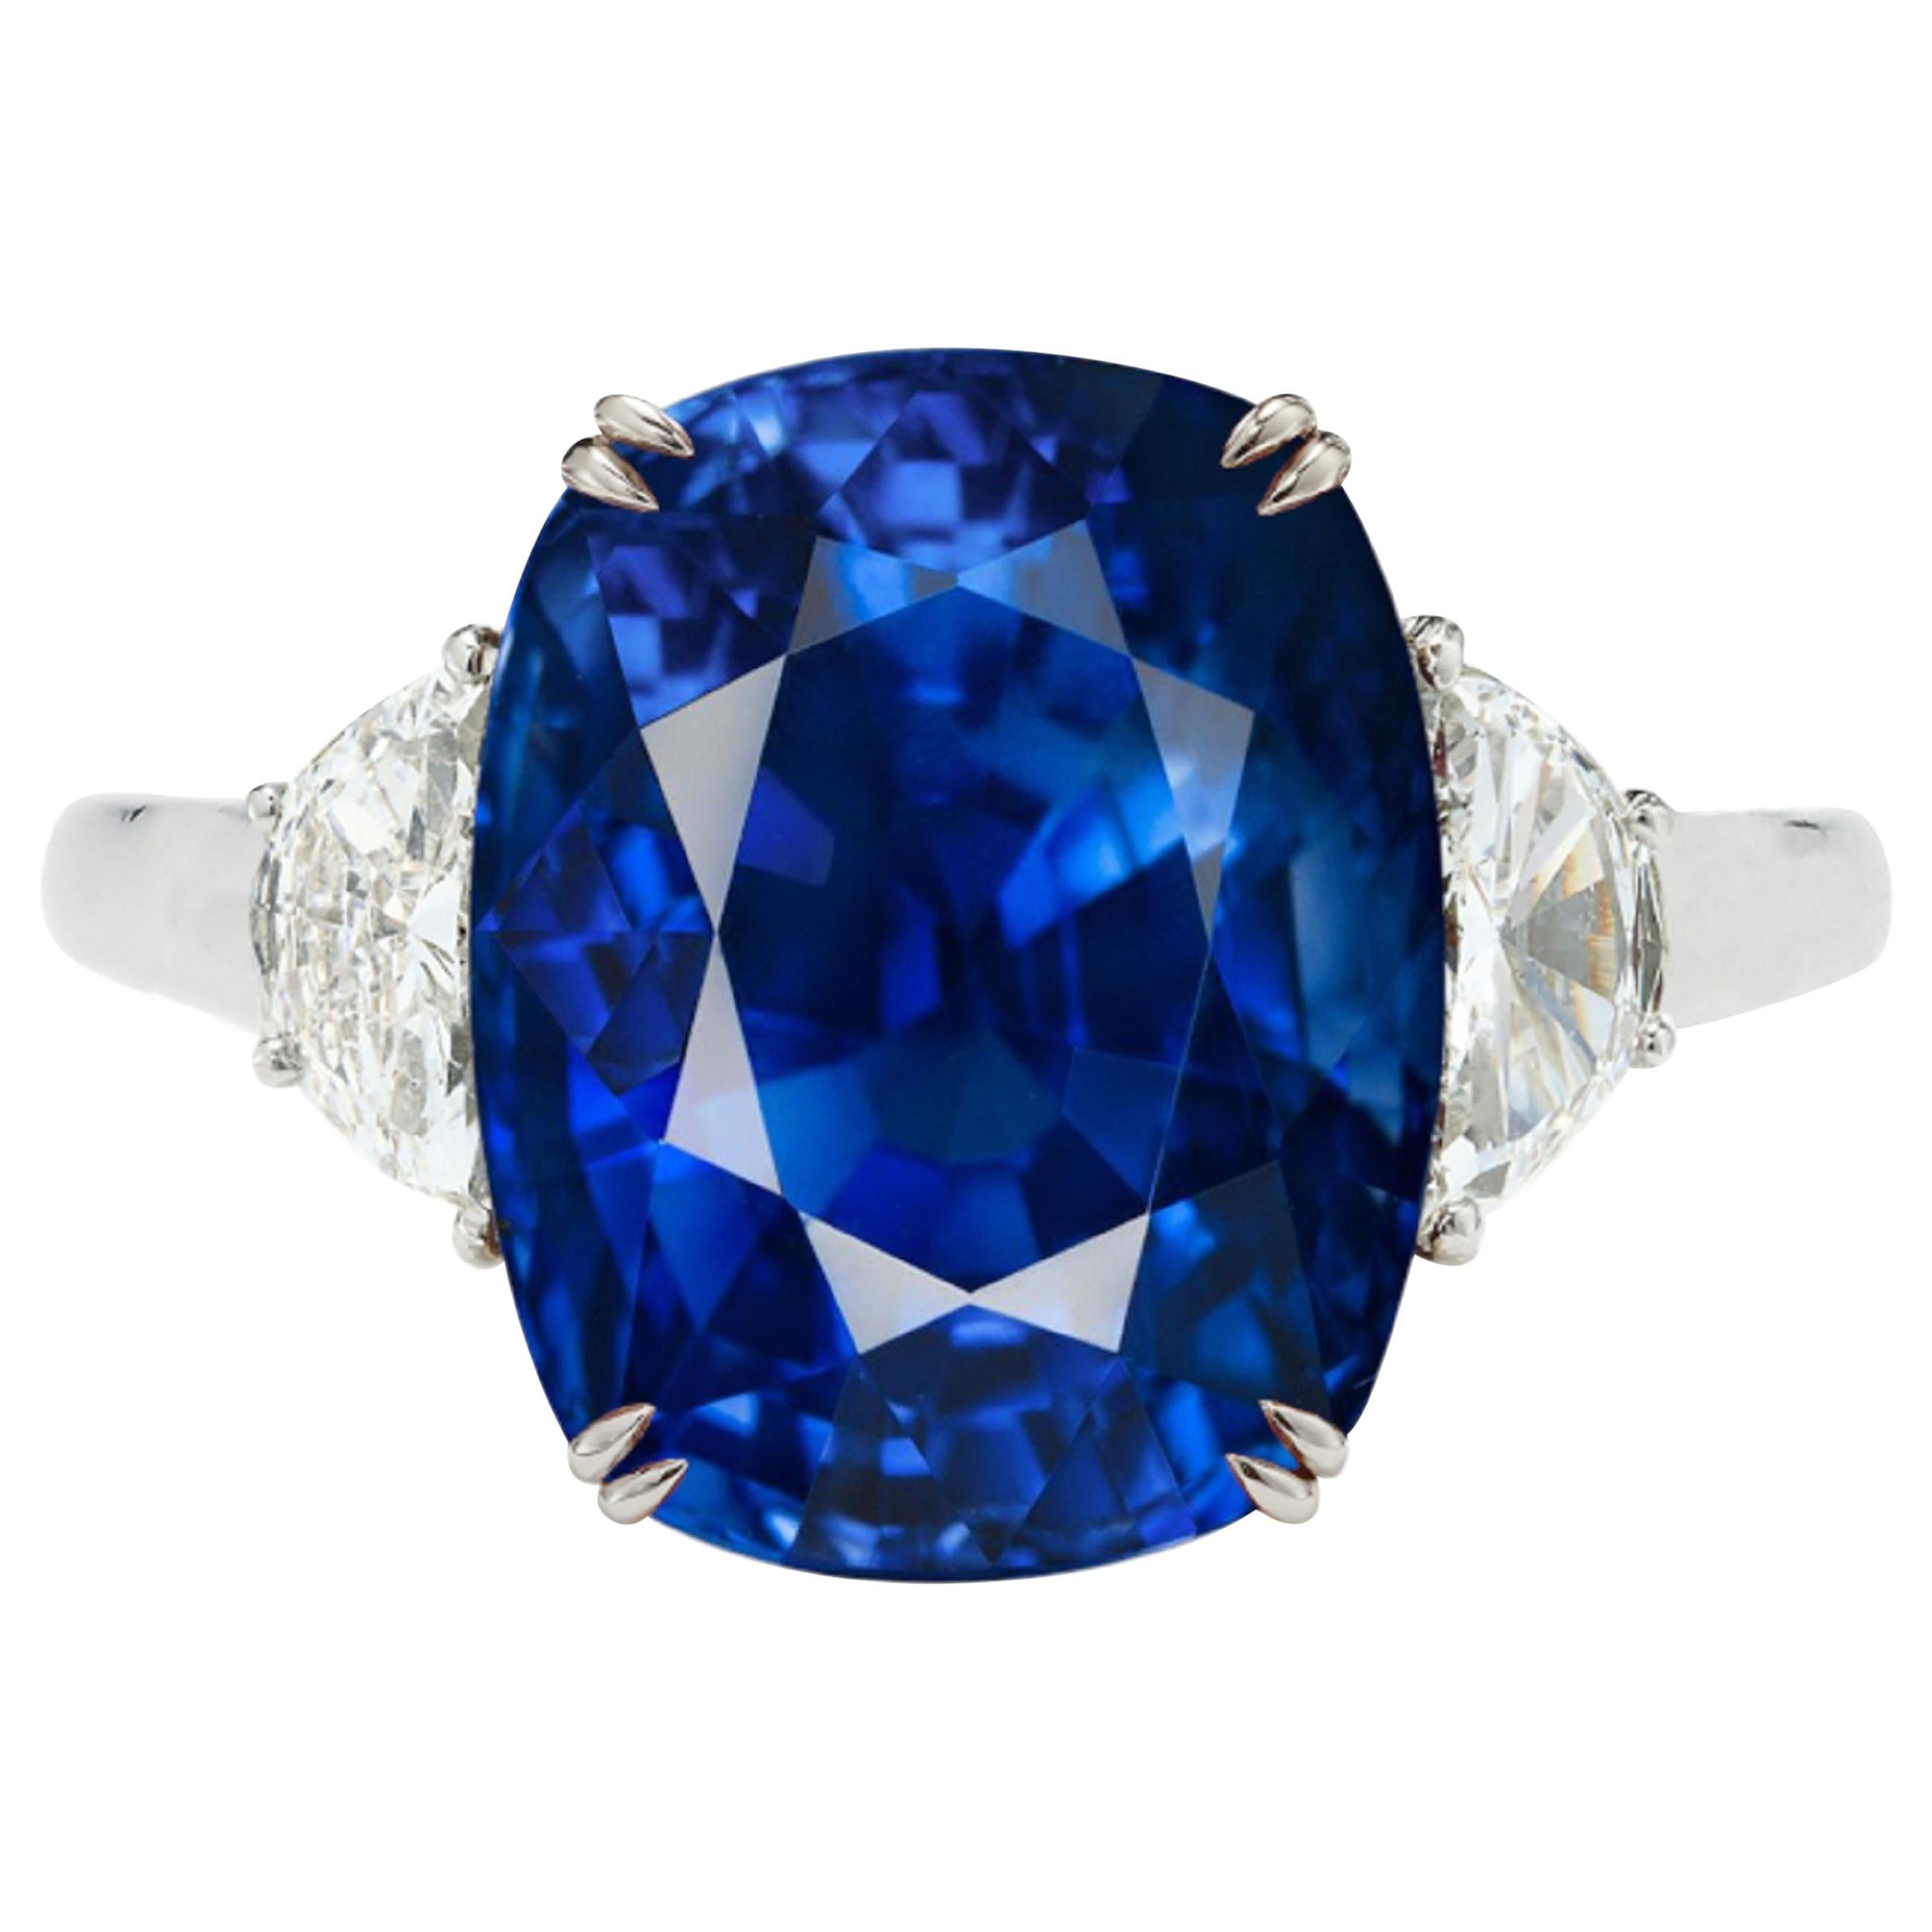 GRS Certified 5.60 Carat Vivid Intense Blue Sri-Lanka Sapphire Ring